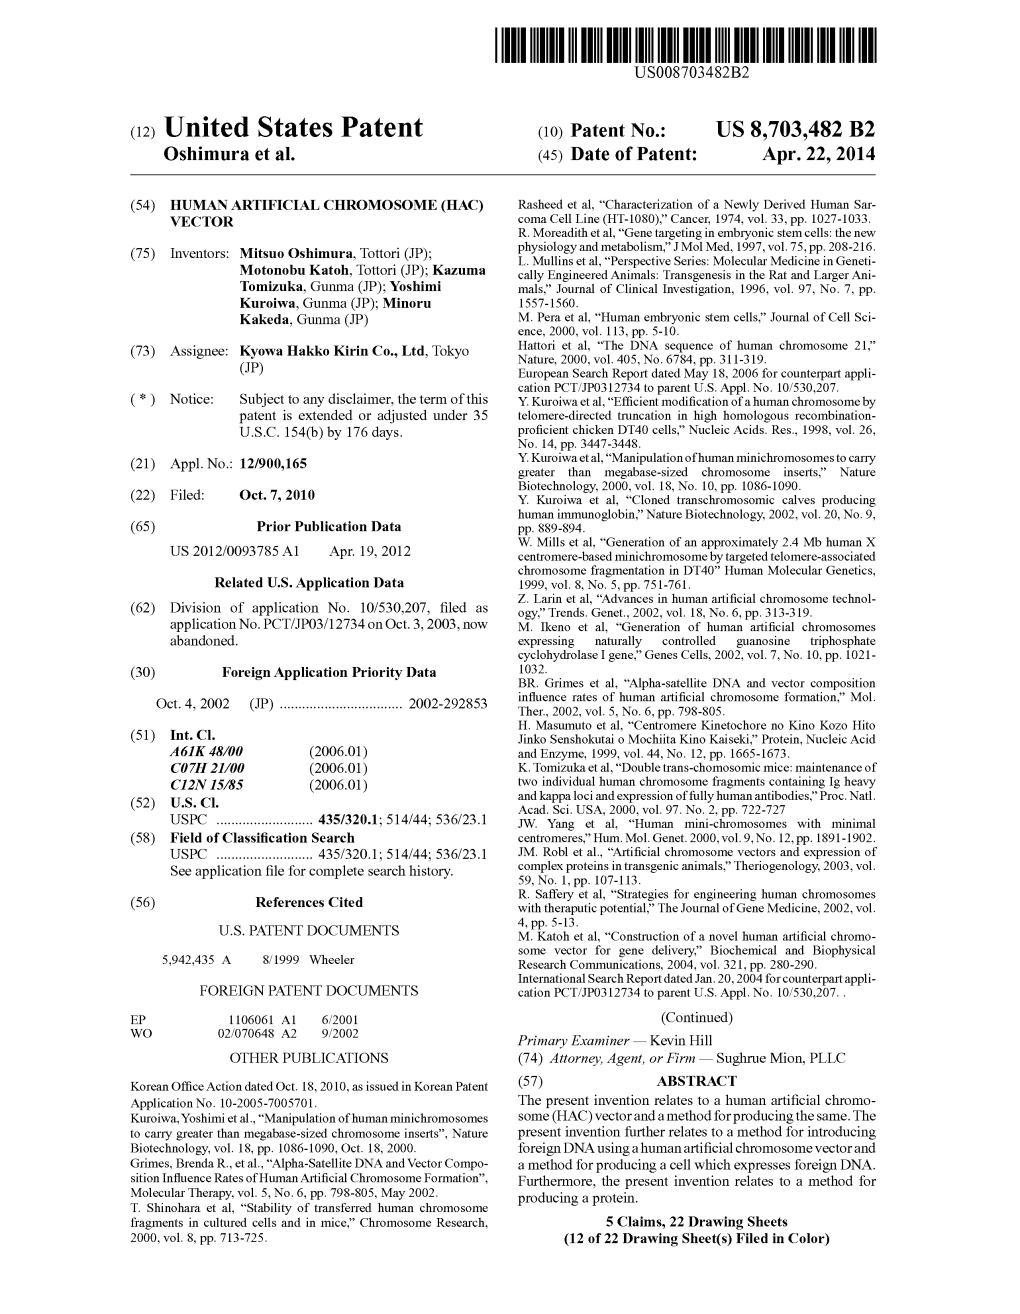 (12) United States Patent (10) Patent No.: US 8,703,482 B2 Oshimura Et Al